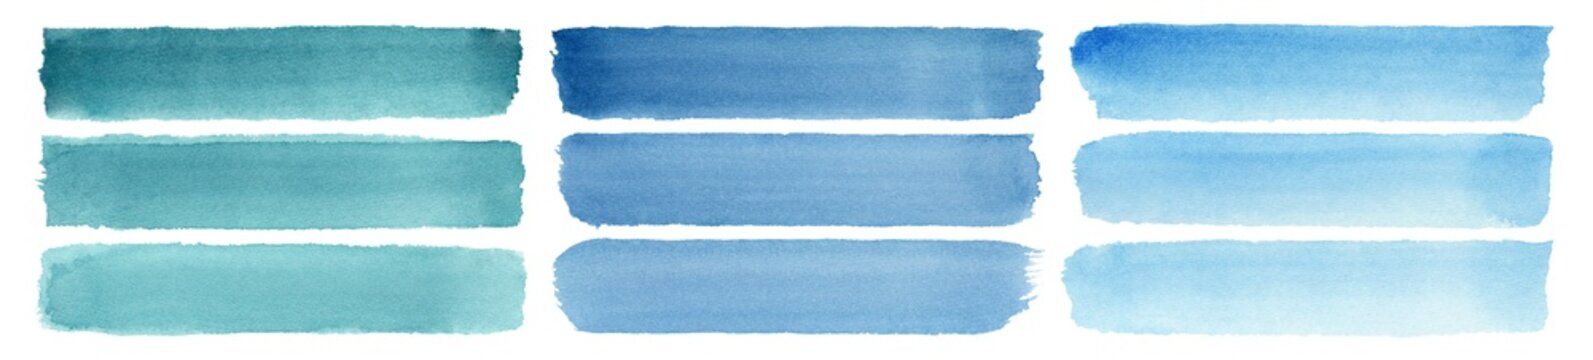 stain stripes ink stroke blue gradient dye splash vibrant colorful creativity textured watercolor